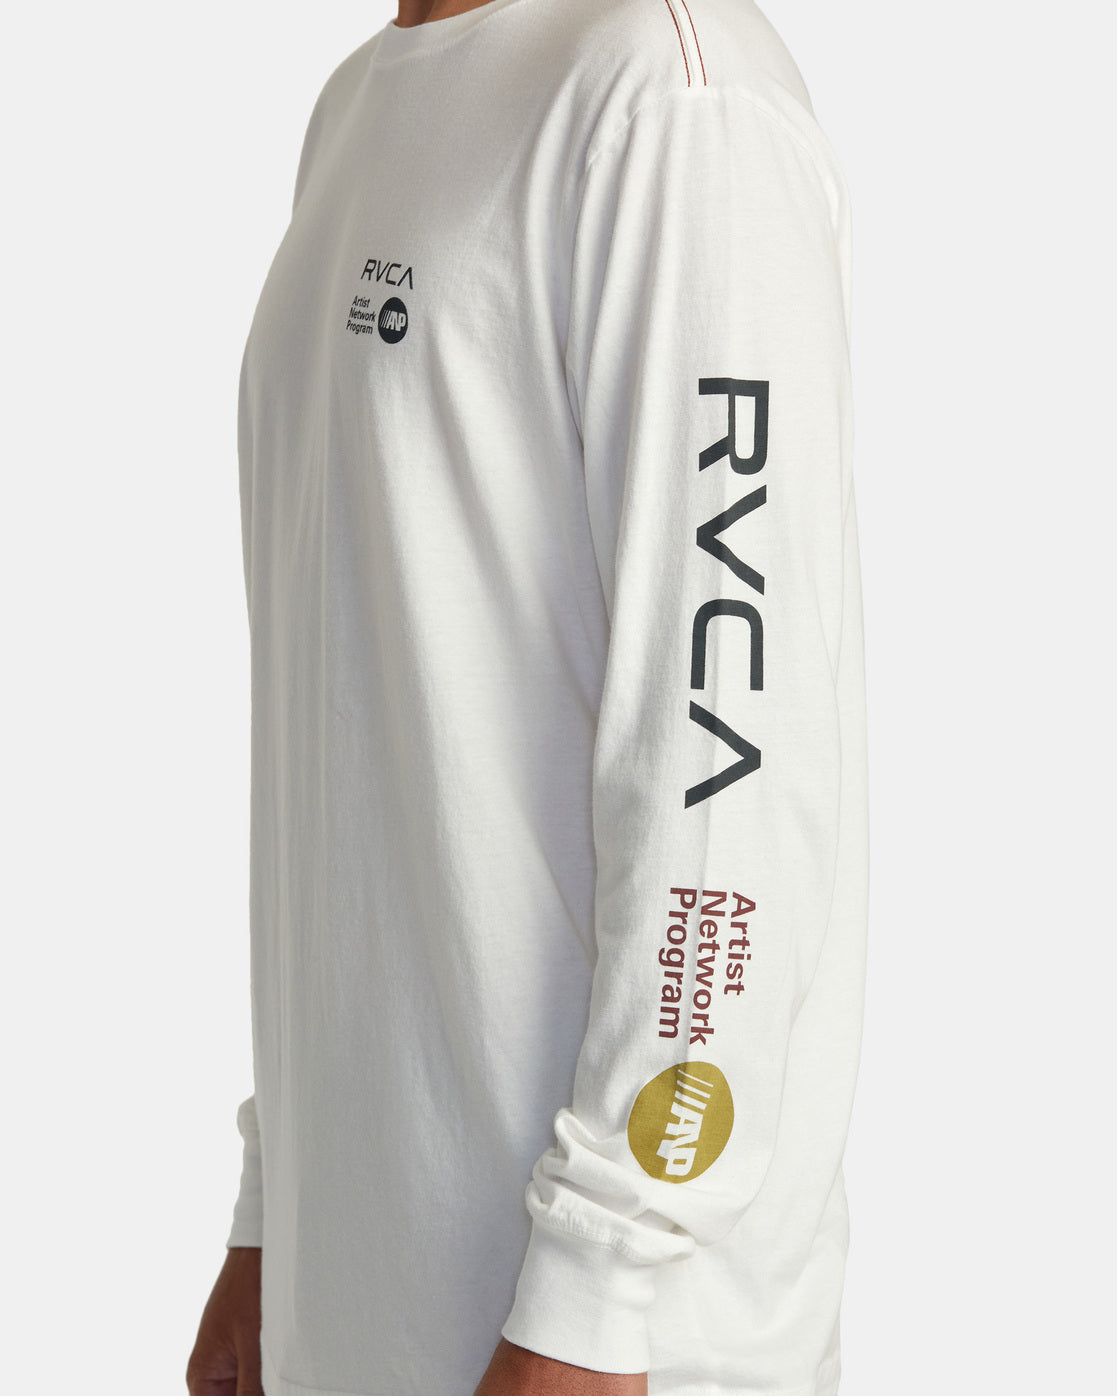 ANP Long Sleeve T-Shirt - Antique White – RVCA